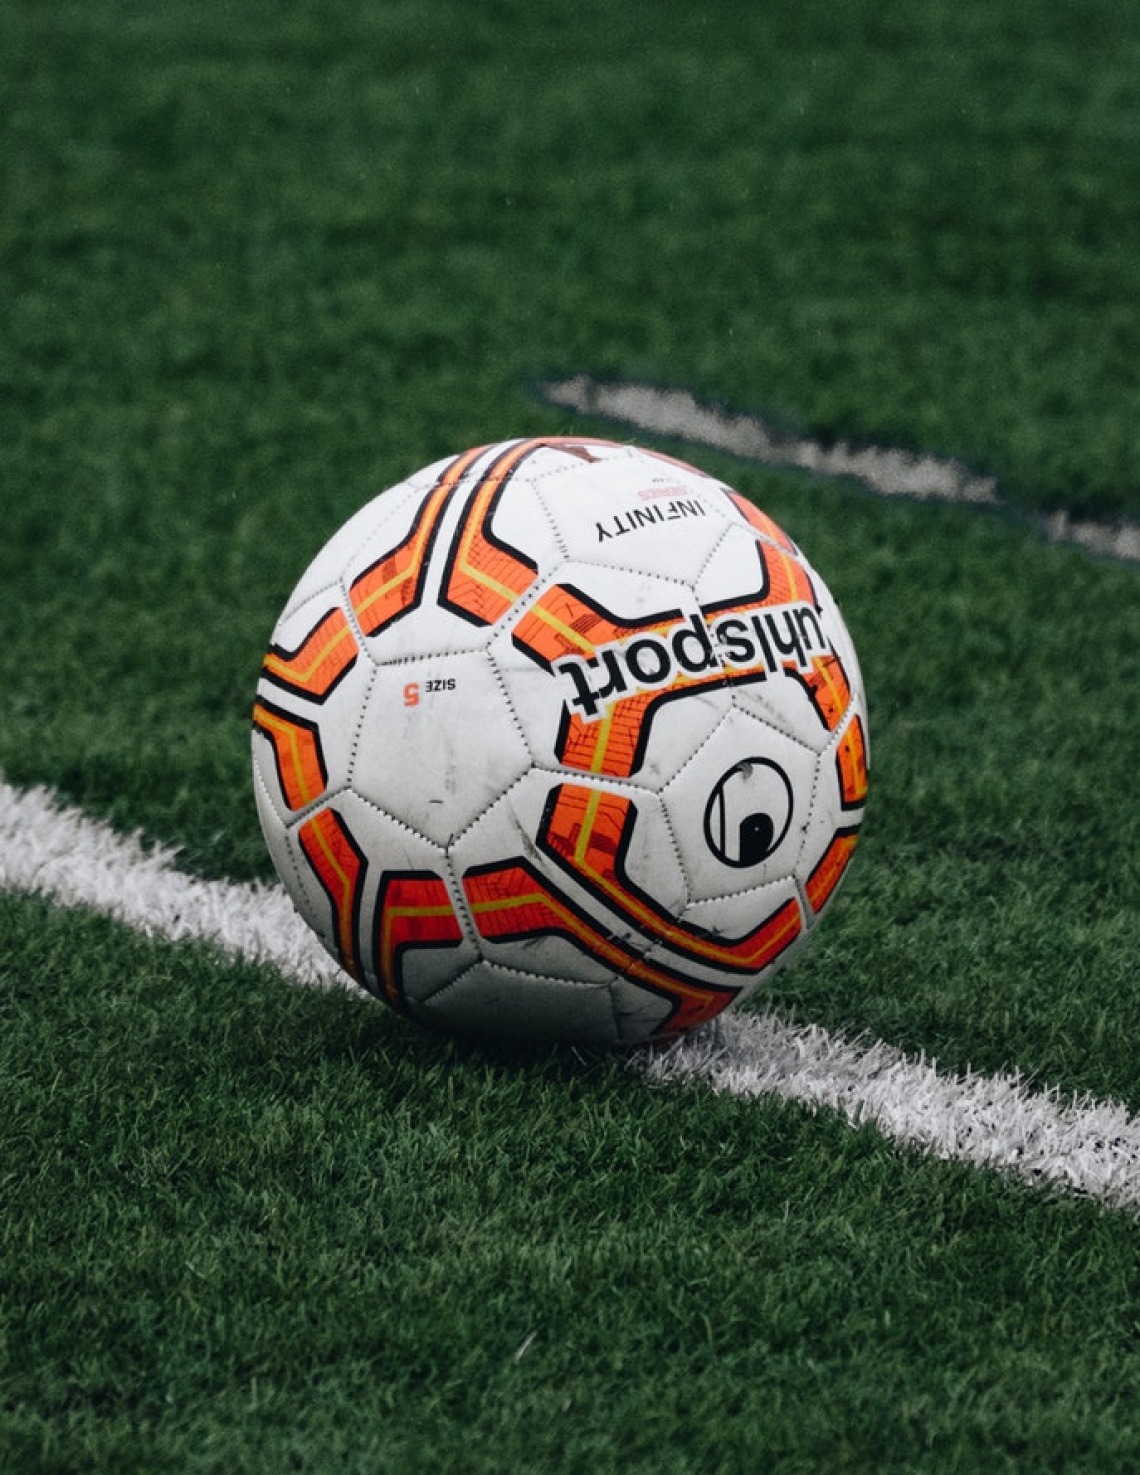 White and orange Uhlsport soccer ball sitting on field next to sideline